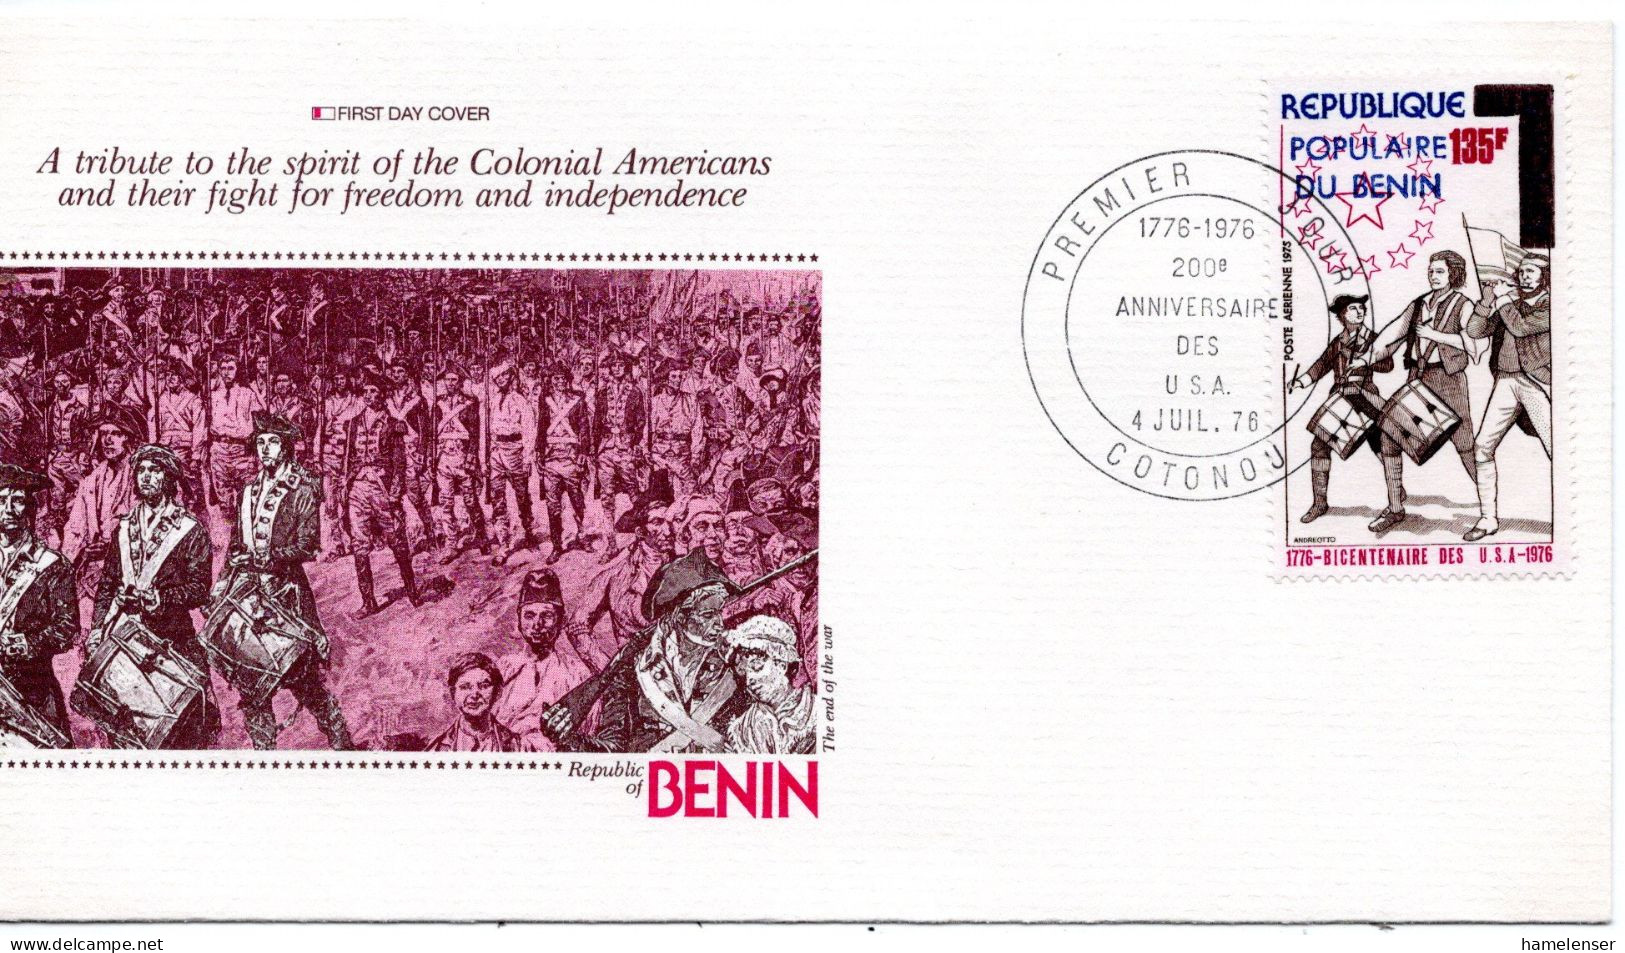 62658 - Benin - 1976 - 135F 200 Jahre USA A FDC COTONOU - Independecia USA